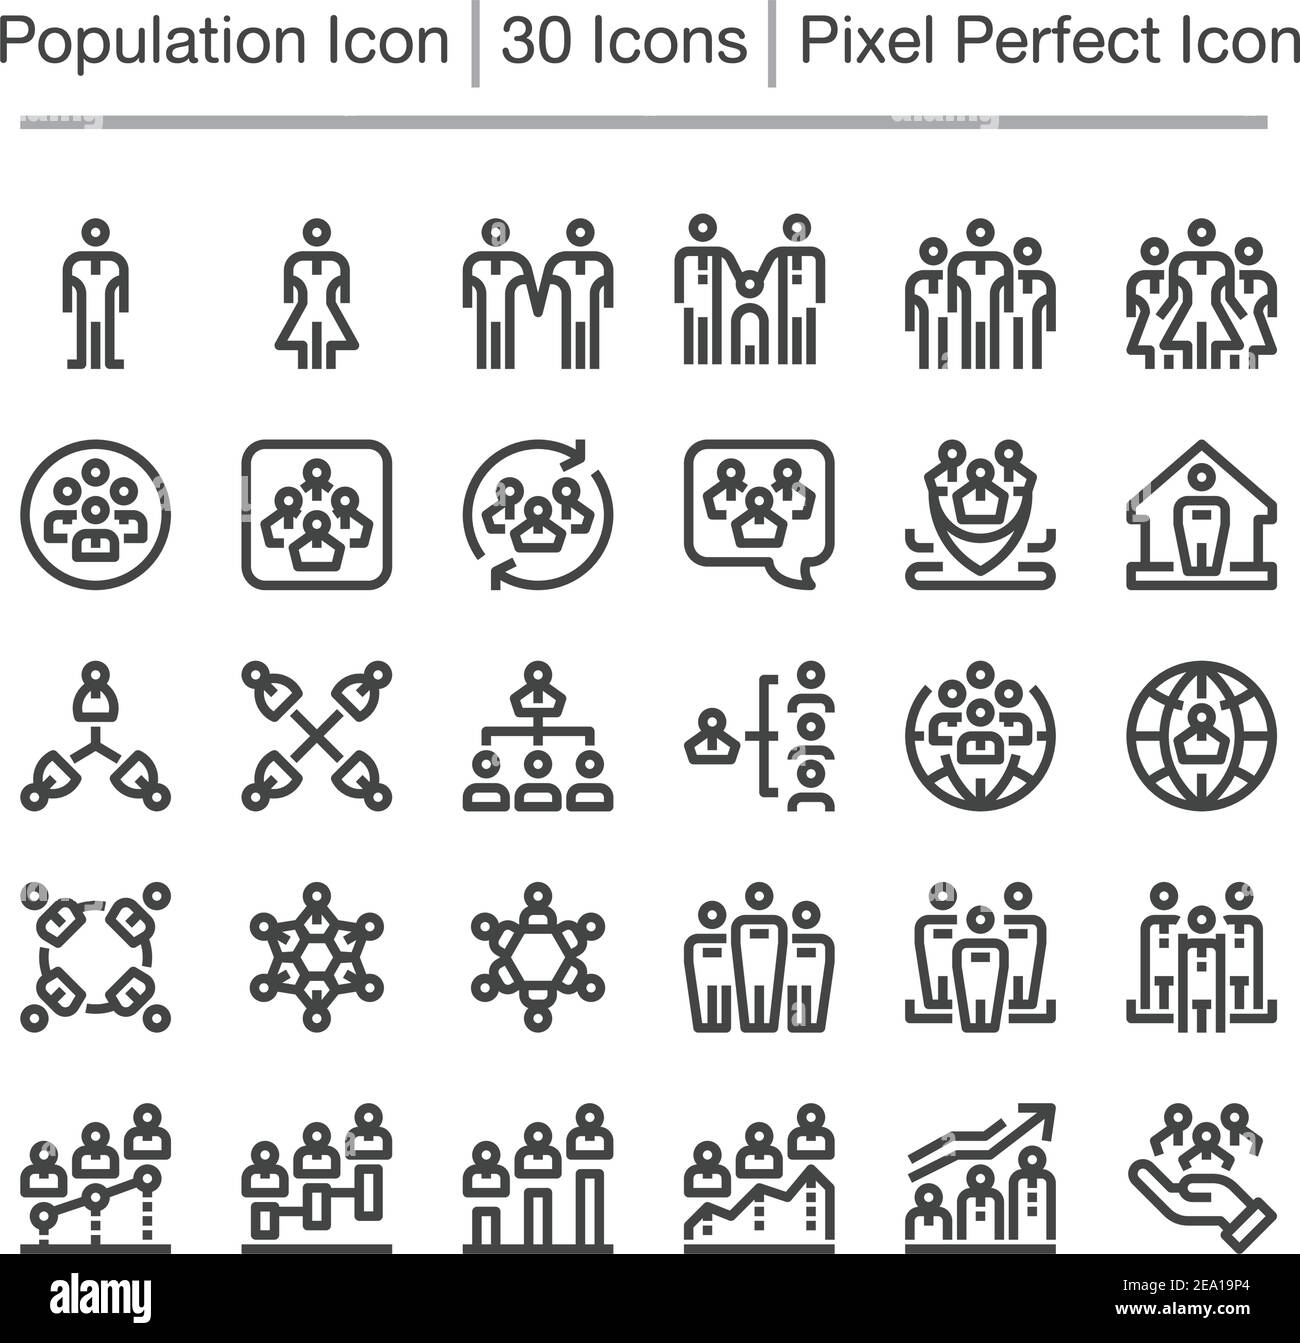 population line icon,editable stroke,pixel perfect icon Stock Vector